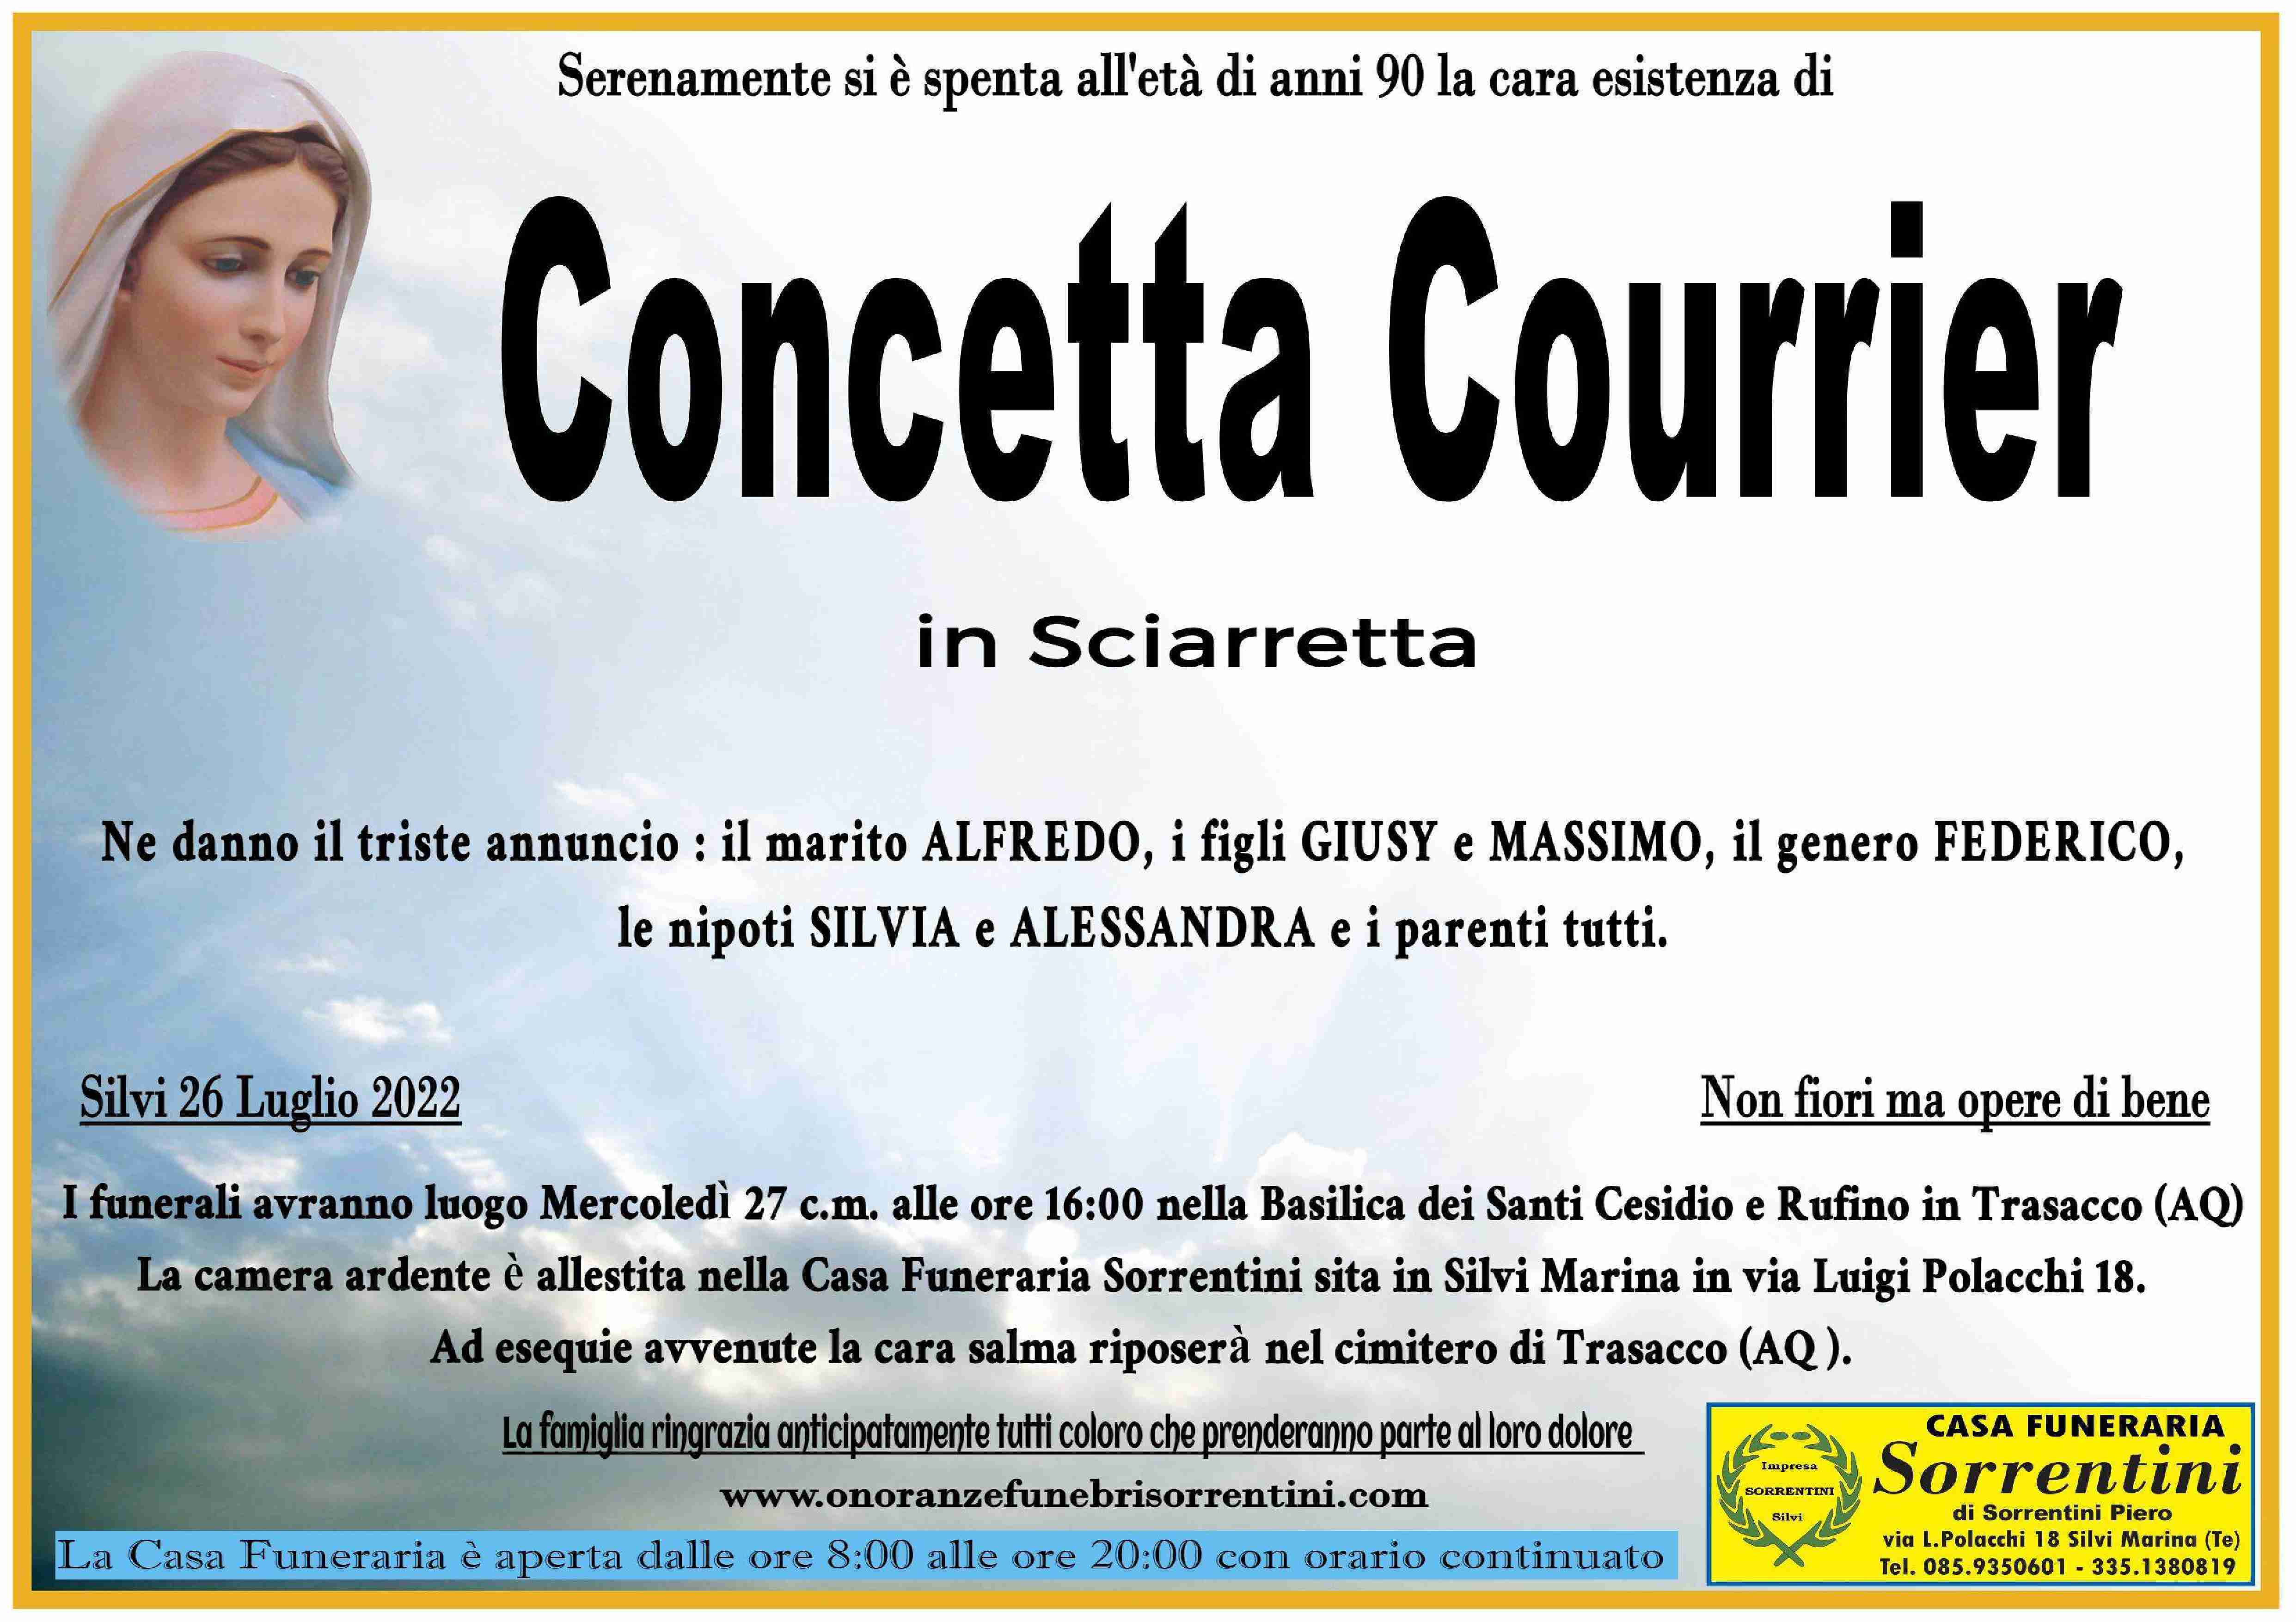 Concetta Courrier